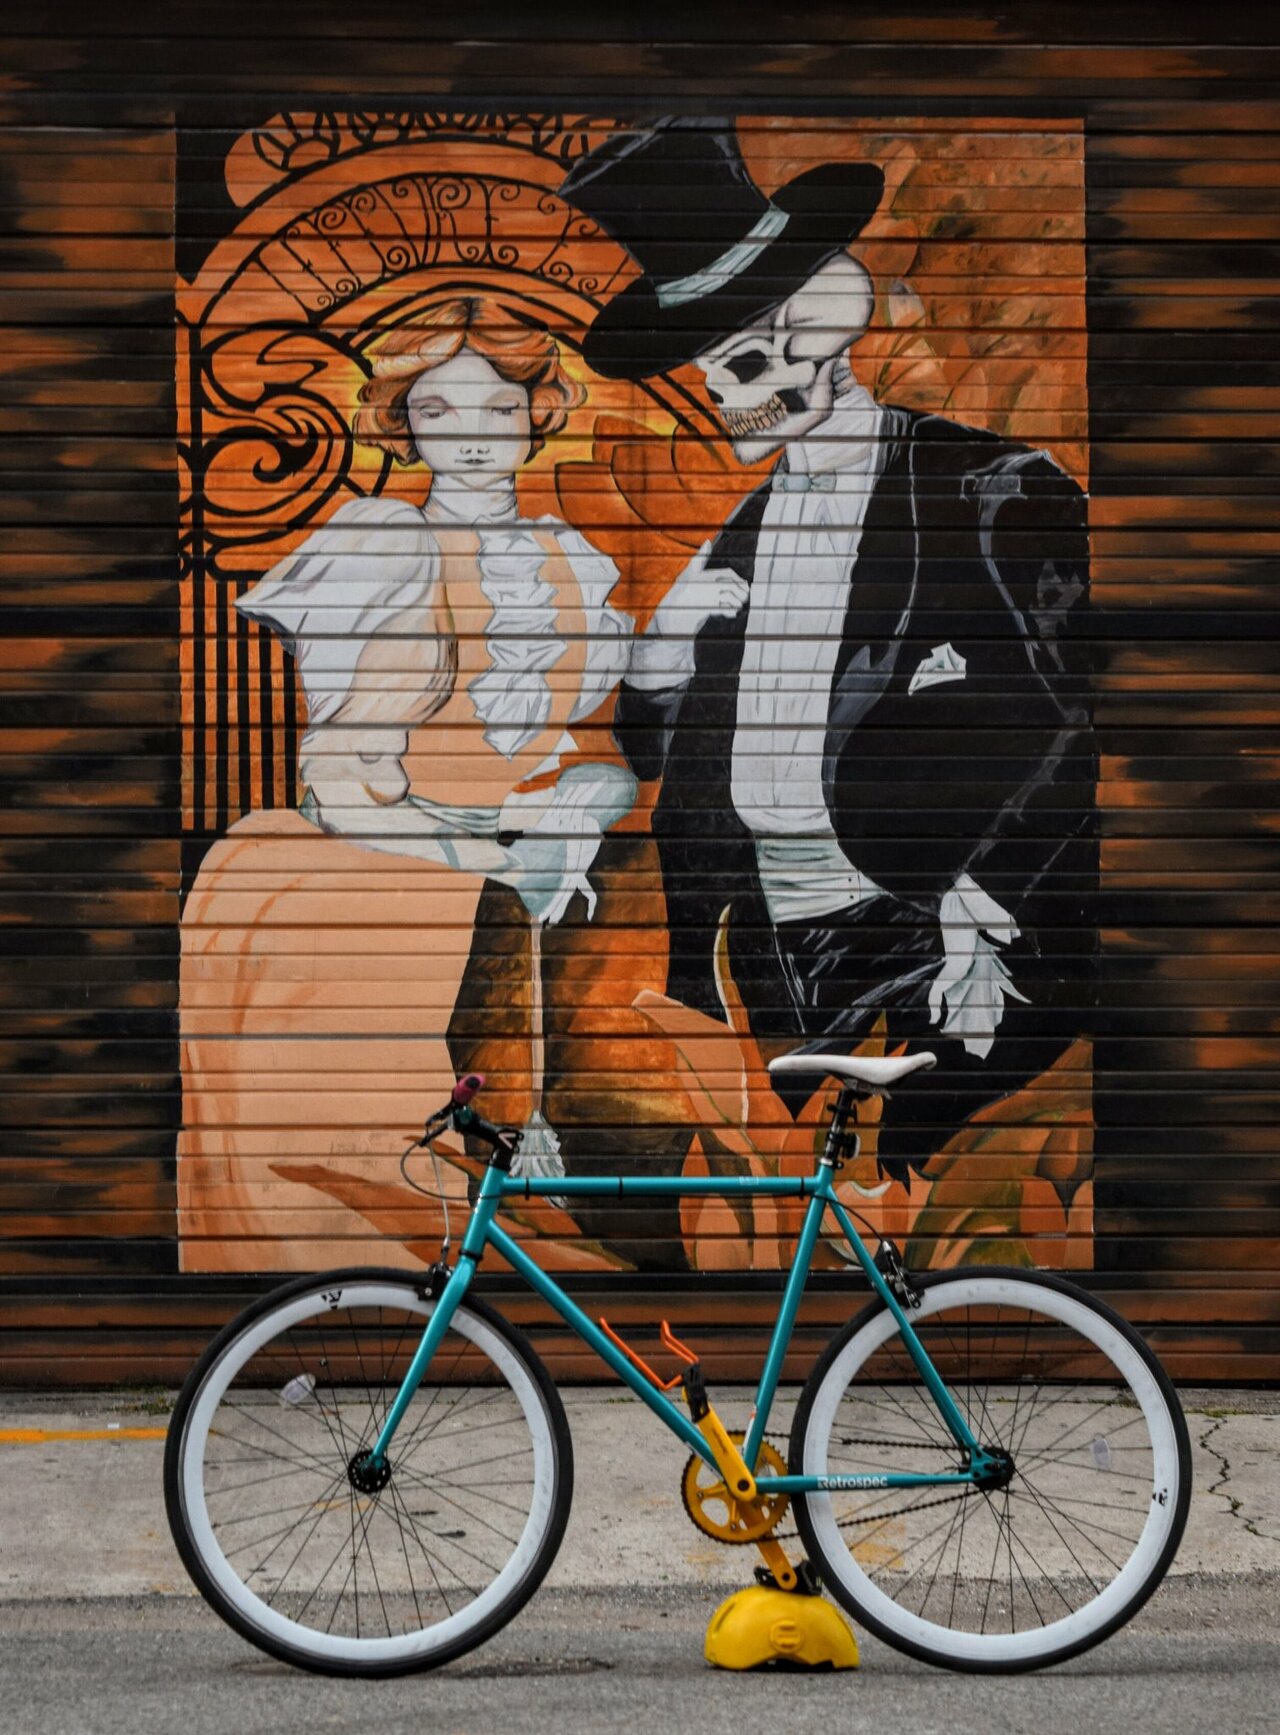 My #bicycle n New Orleans #streetart . by @picturenola..Media@#bananasocialmedia #travel ✈ #vacation #nola https://t.co/L5SsMLXDSQ